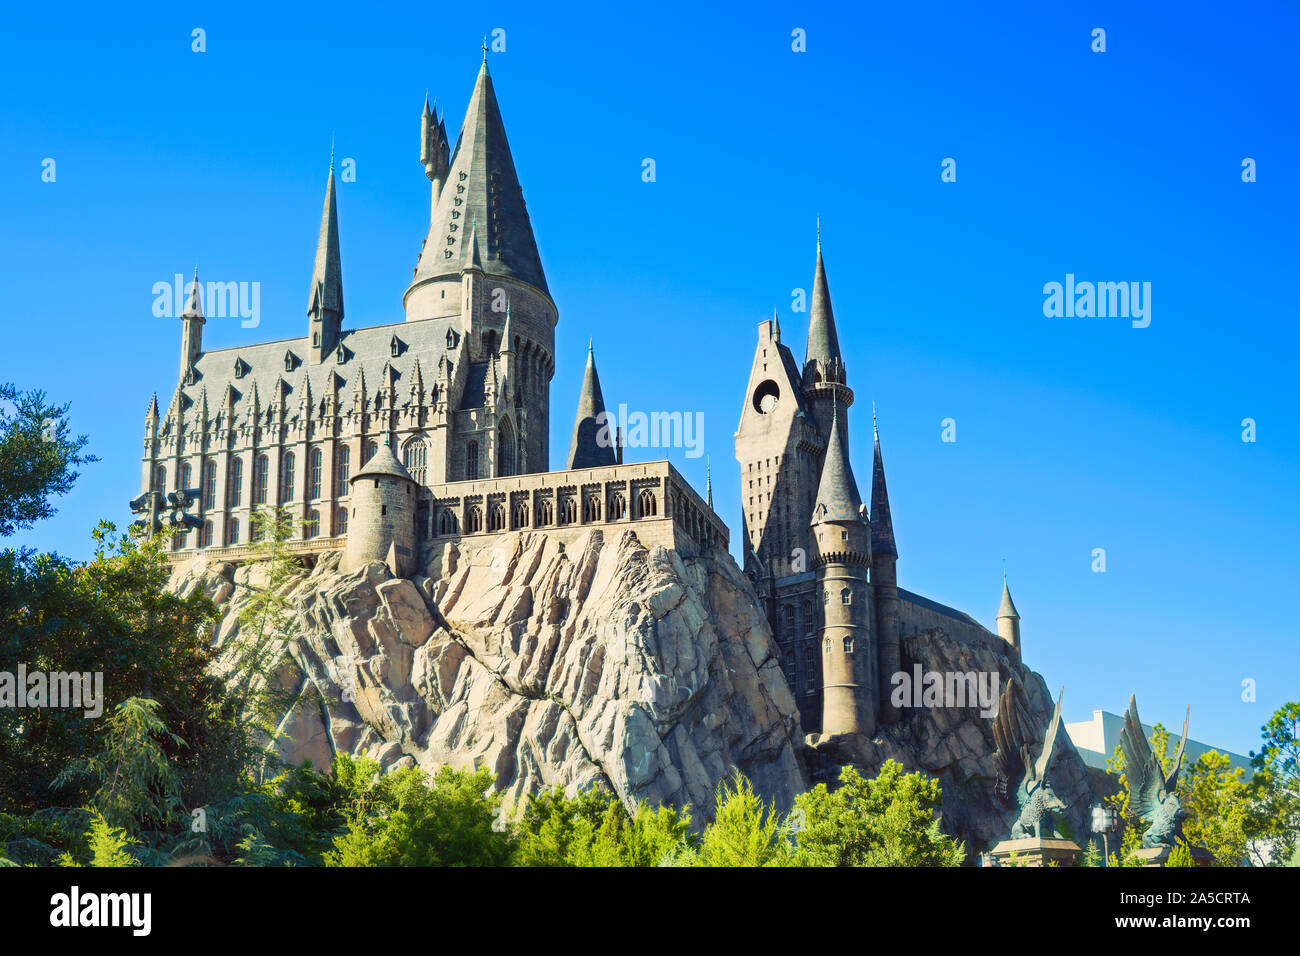 Le Château de Poudlard, Universal Studios Orlando, Wizarding World of Harry Potter, Islands of Adventure, Universal Poudlard, Florida, USA Banque D'Images